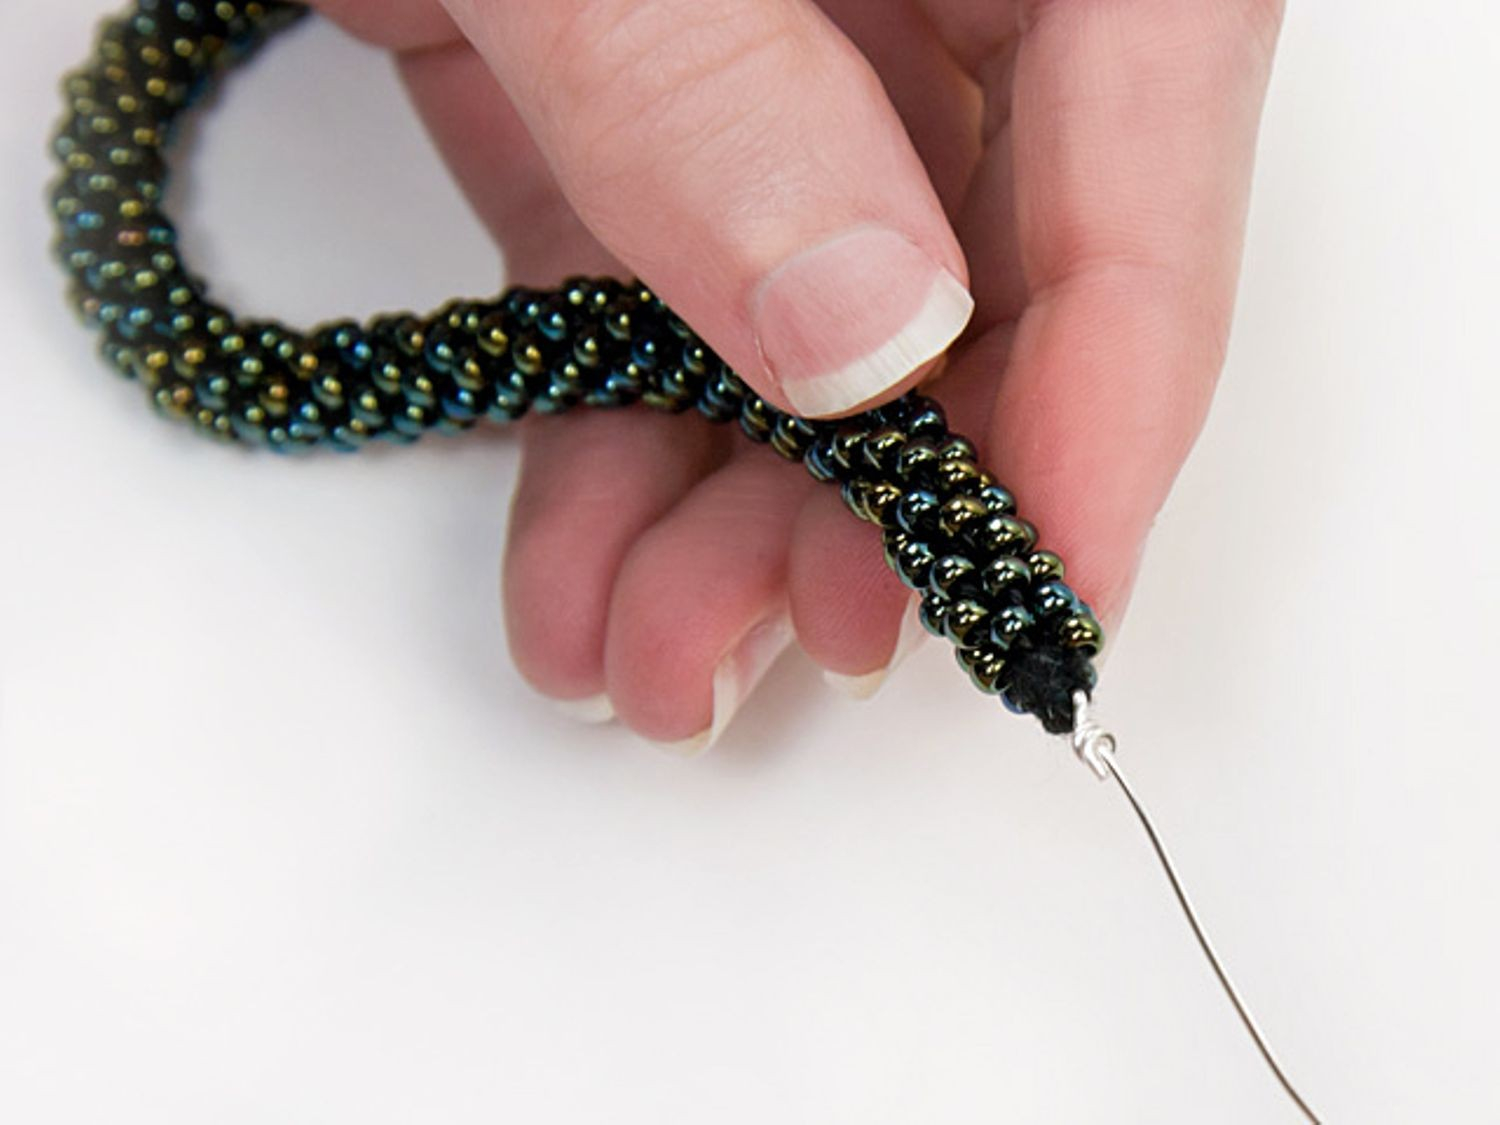 Bead Crochet Rope Patterns How To Make Beaded Crochet Rope Artbeads